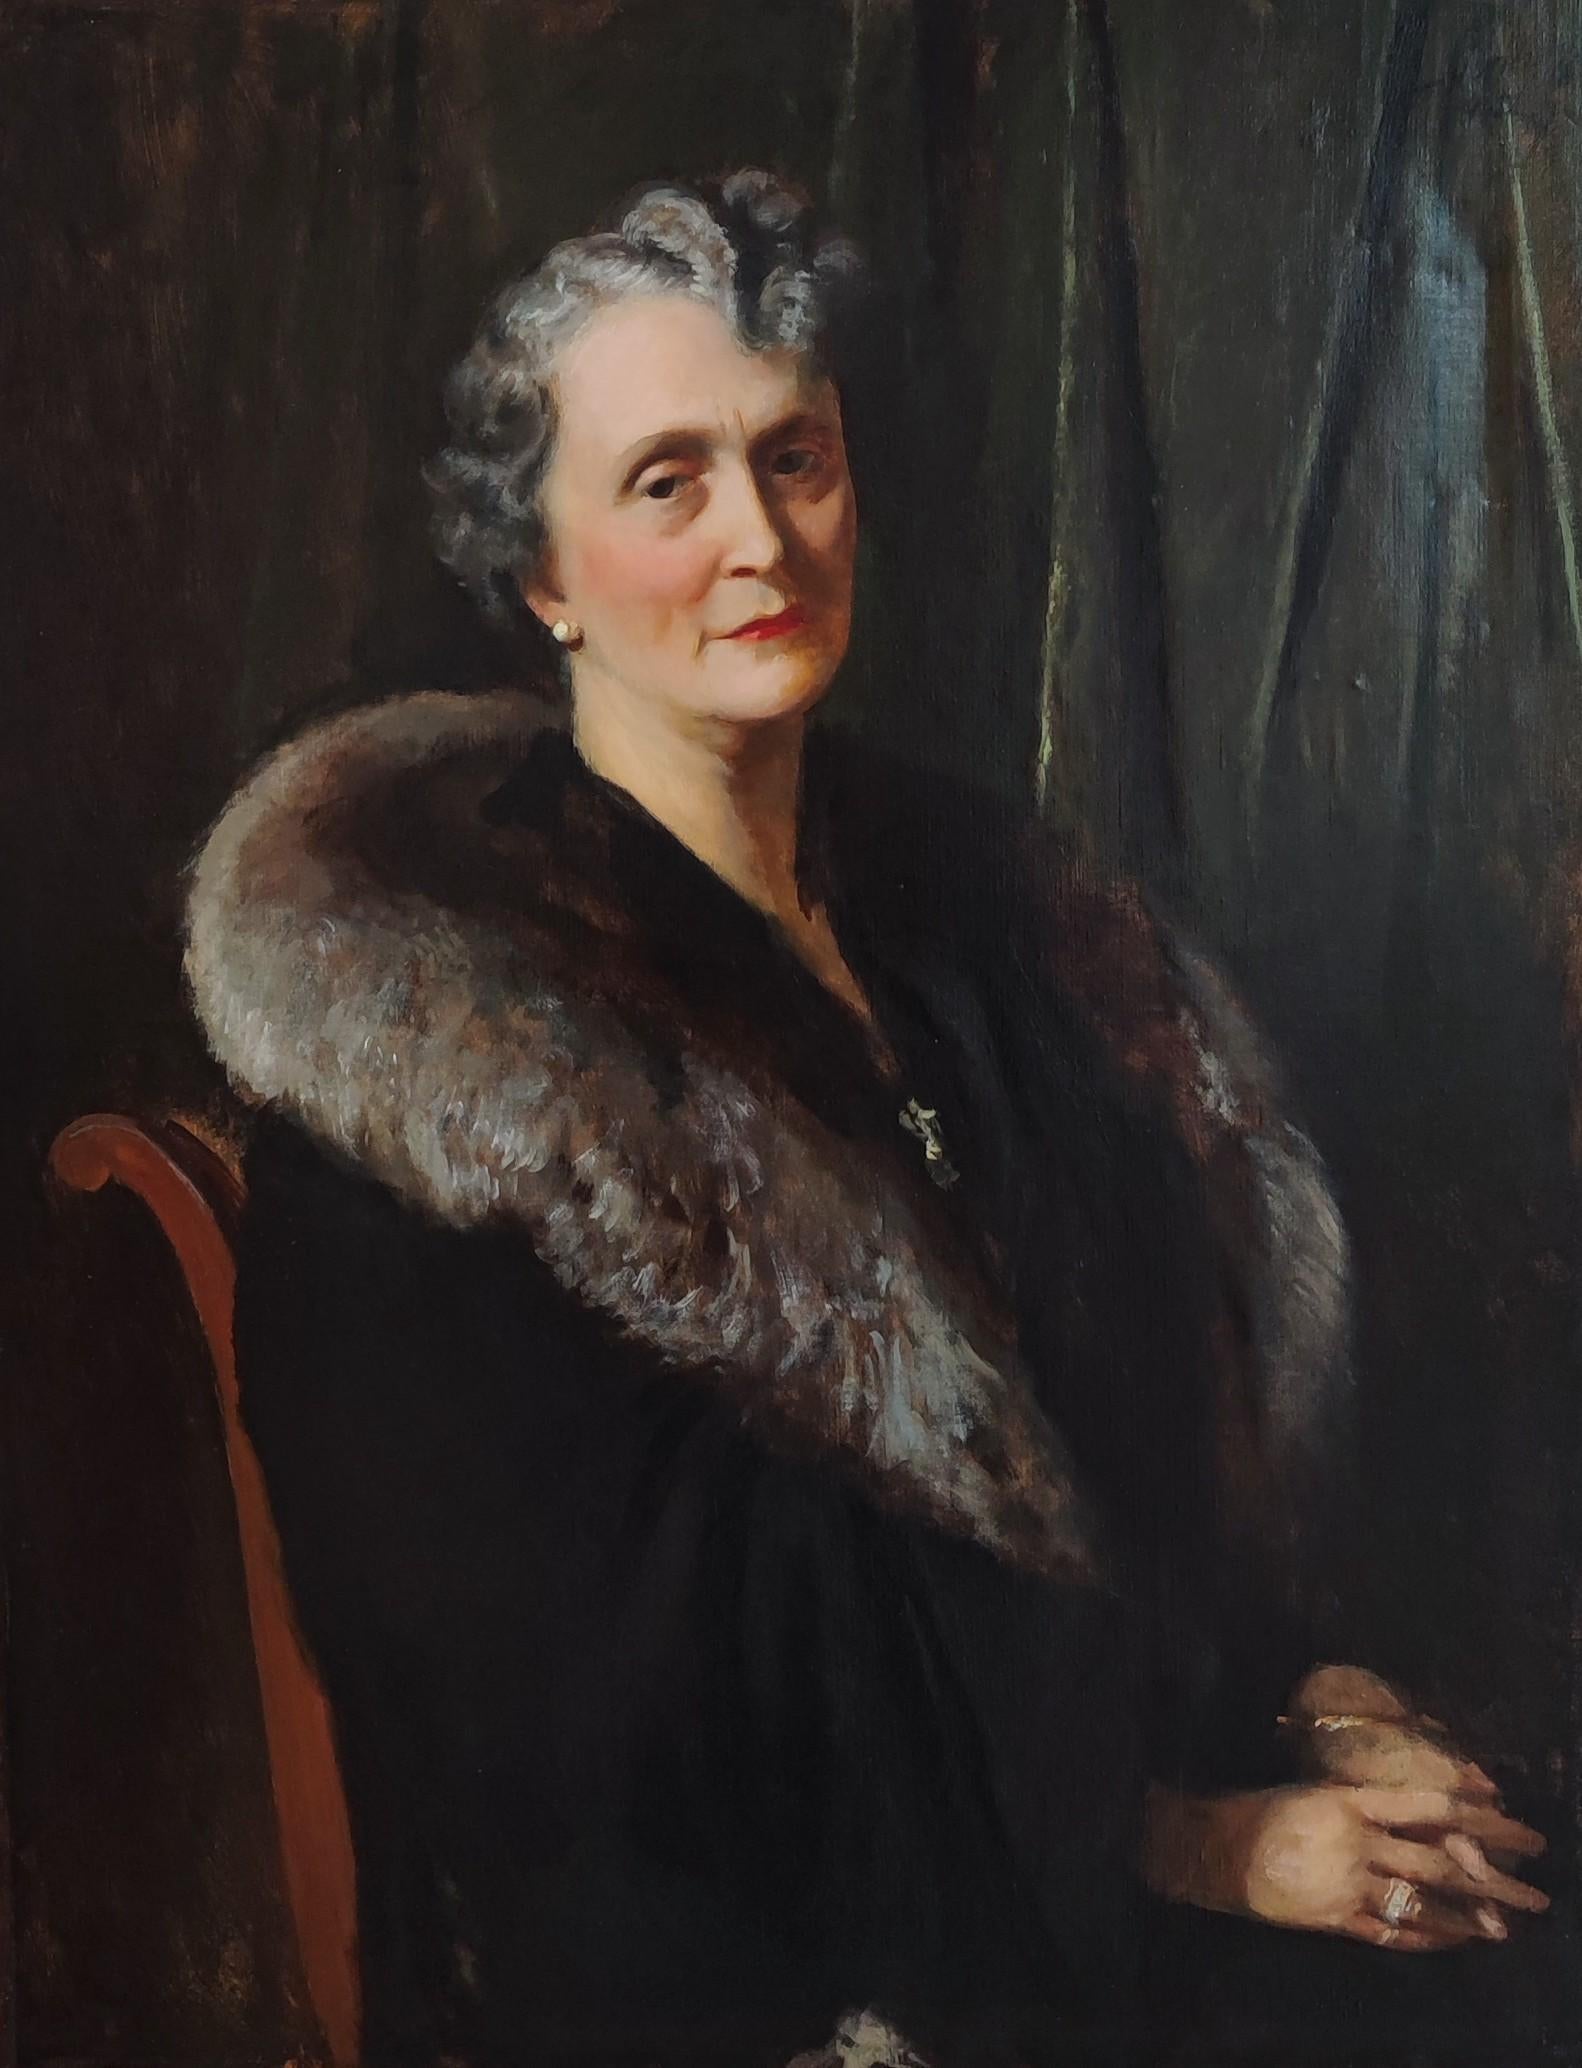 Unknown Portrait Painting - Portrait of an elegant lady sitting